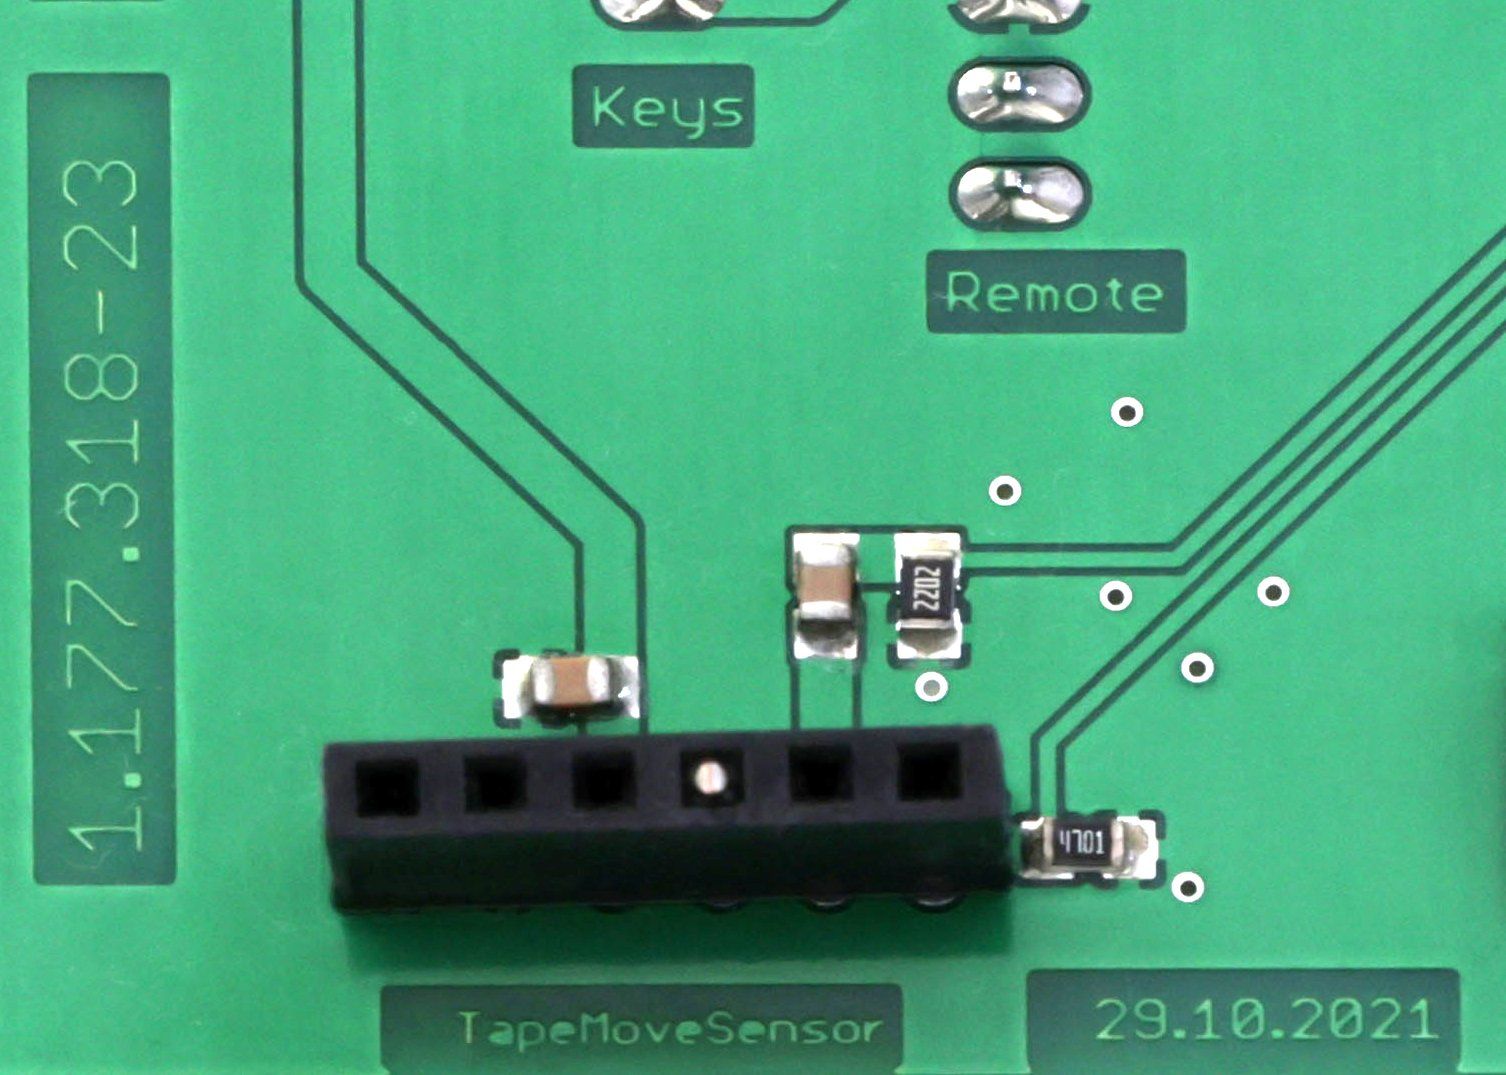 Anschlüsse für Tape Move Sensor Revox B77, revox-online